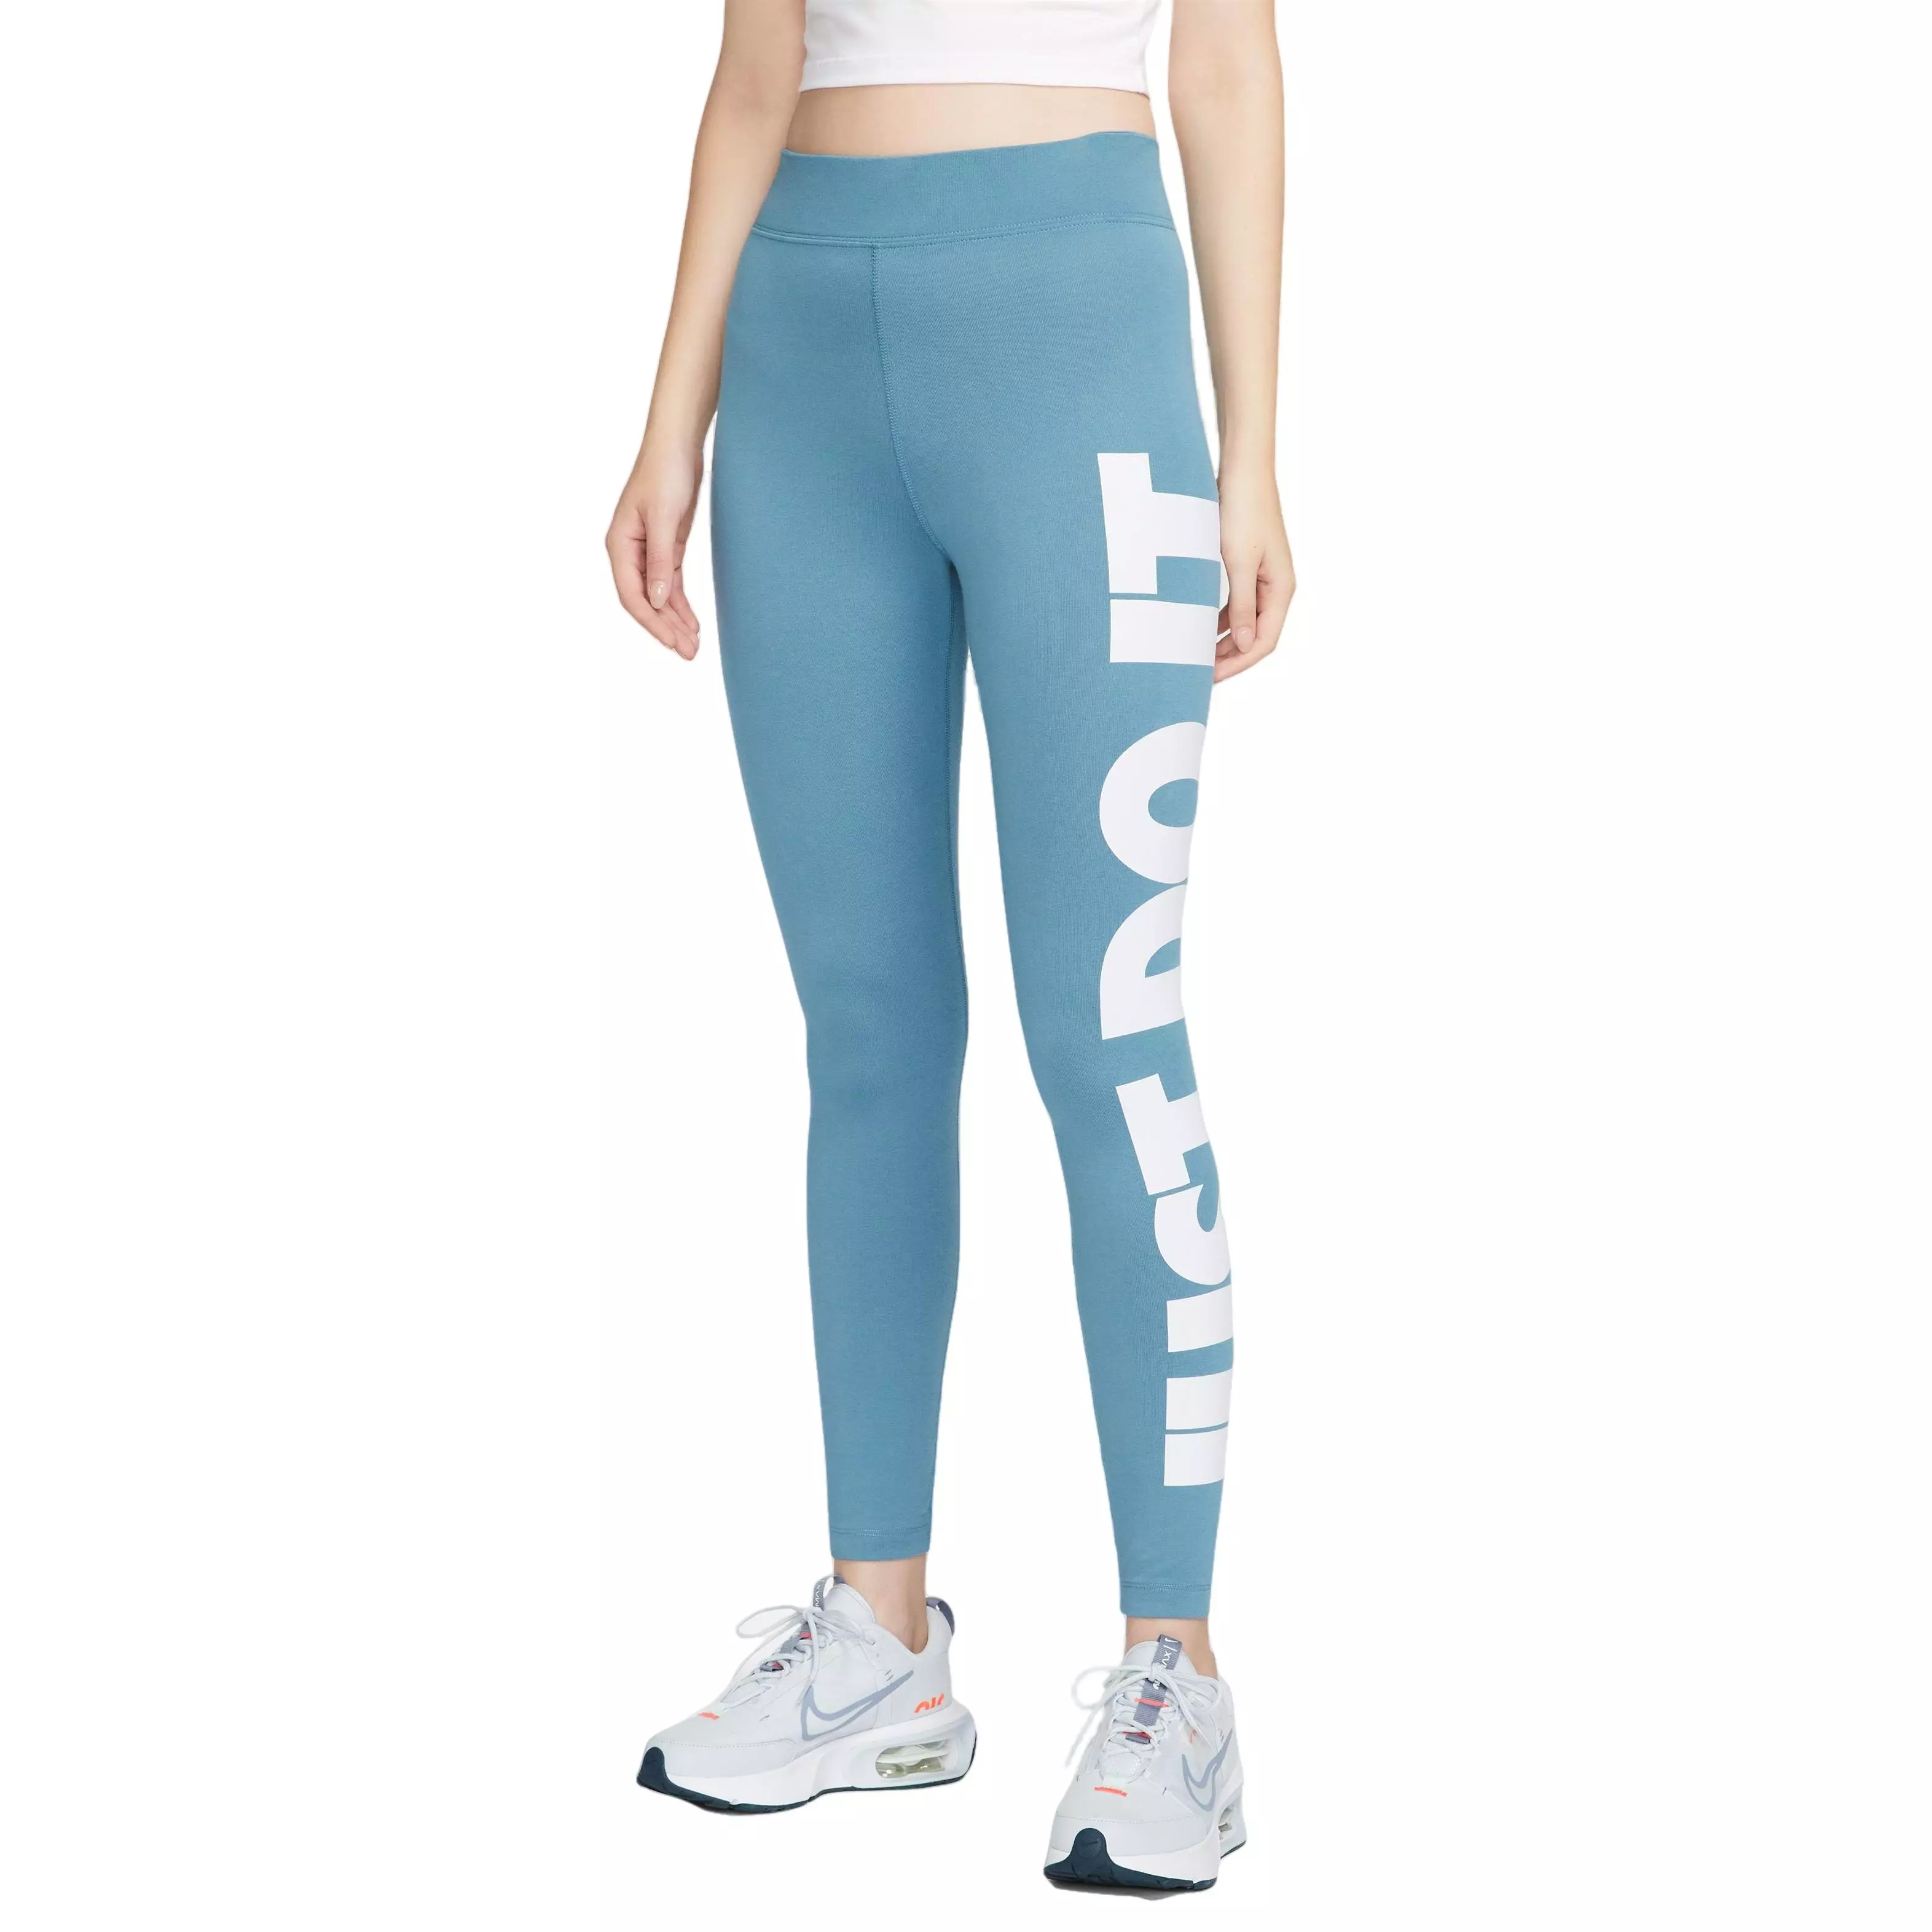 girls Nike sweathirts & leggings outfits pick set siz 4 5 6X(NWT)